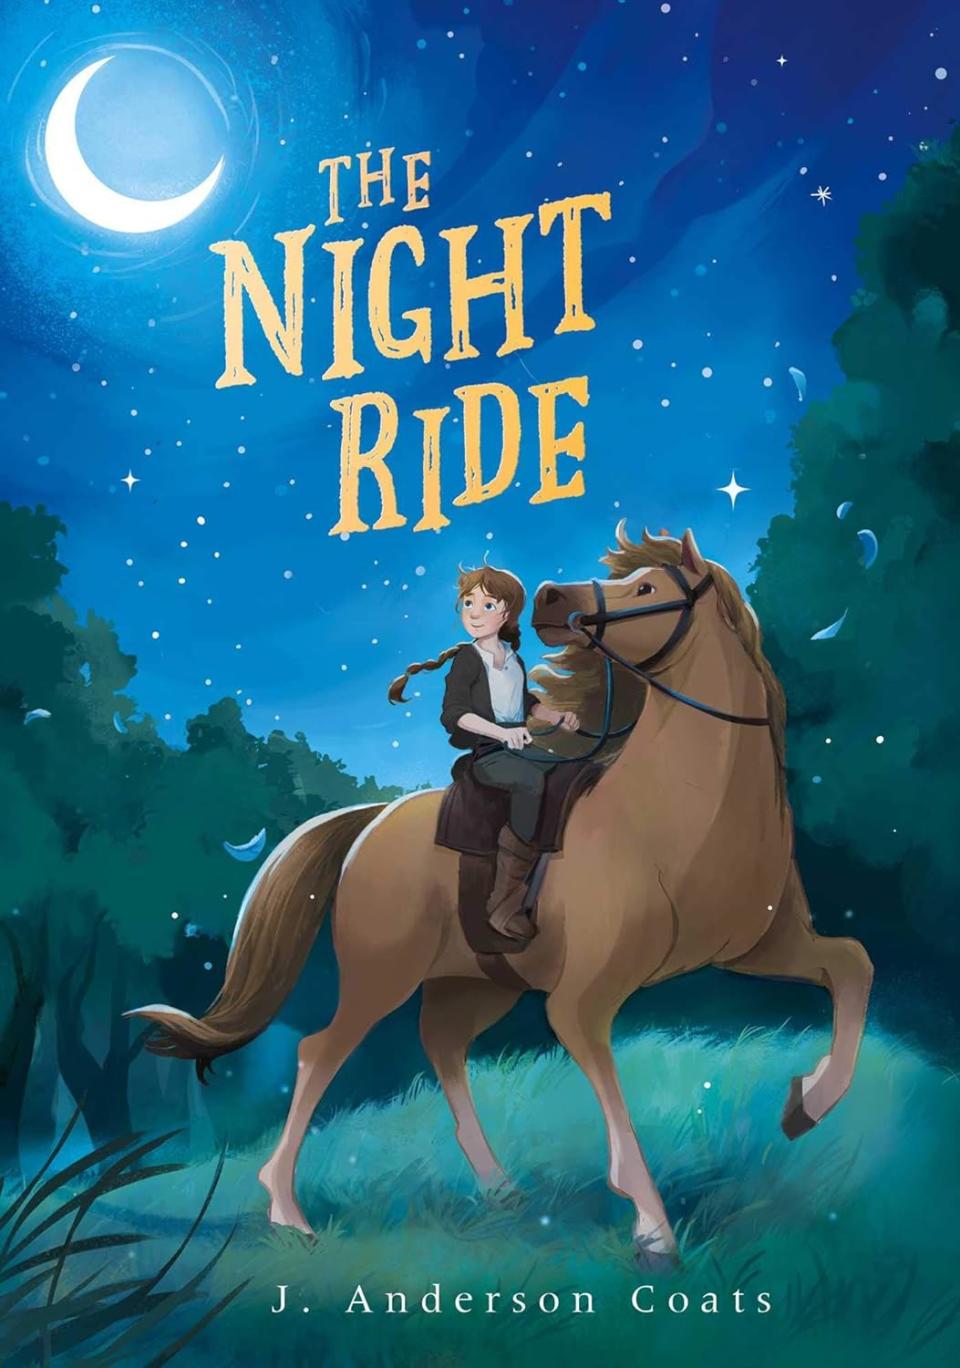 "The Night Ride"